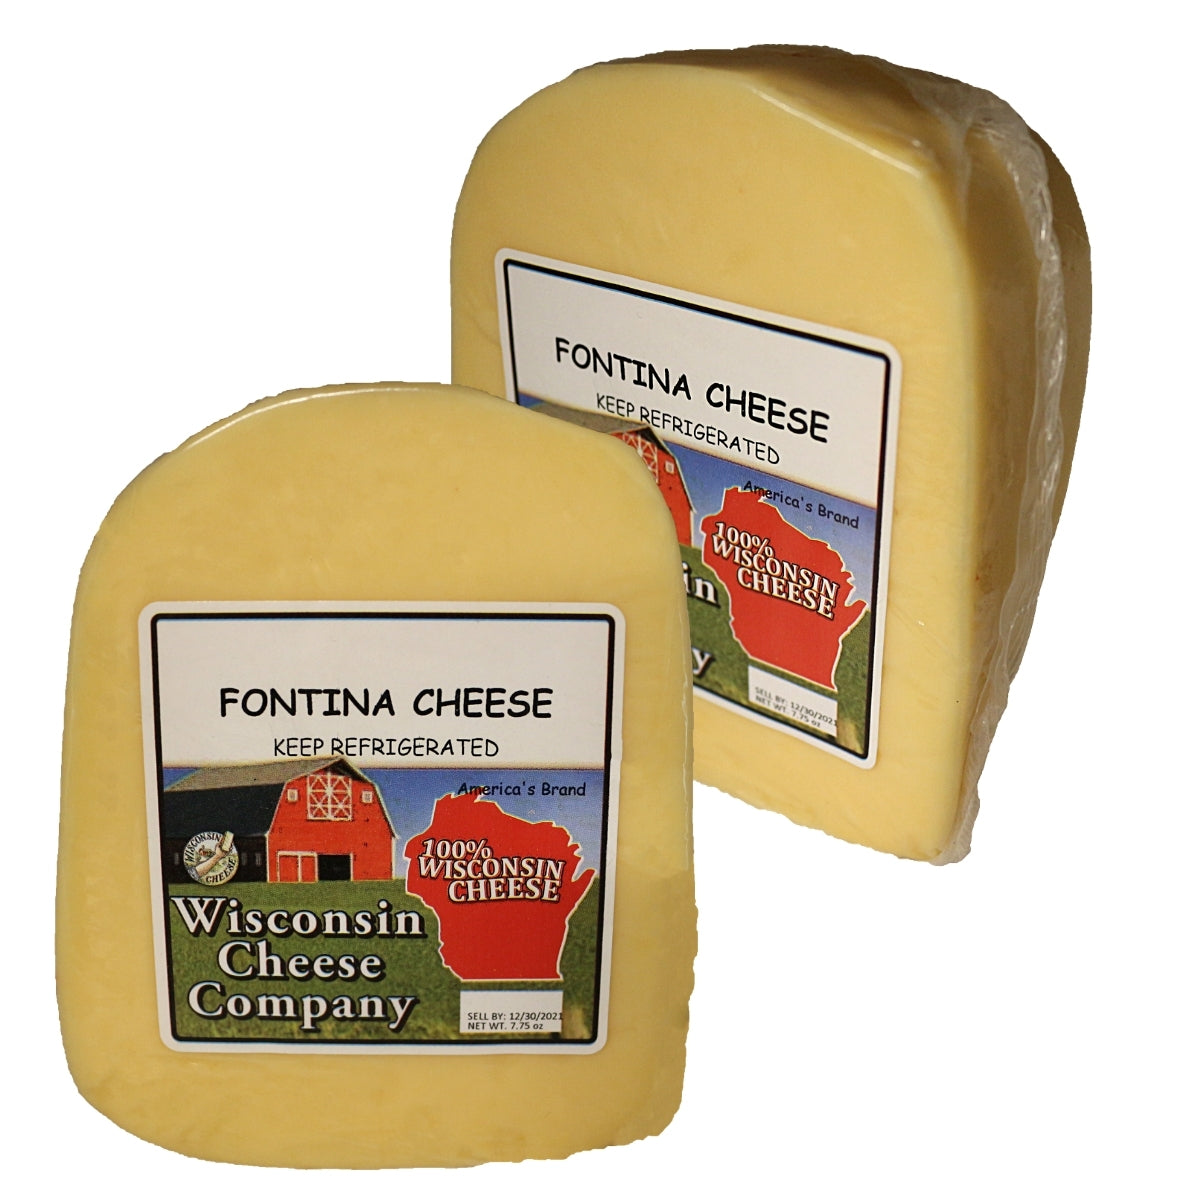 Two blocks of Fontina Cheese